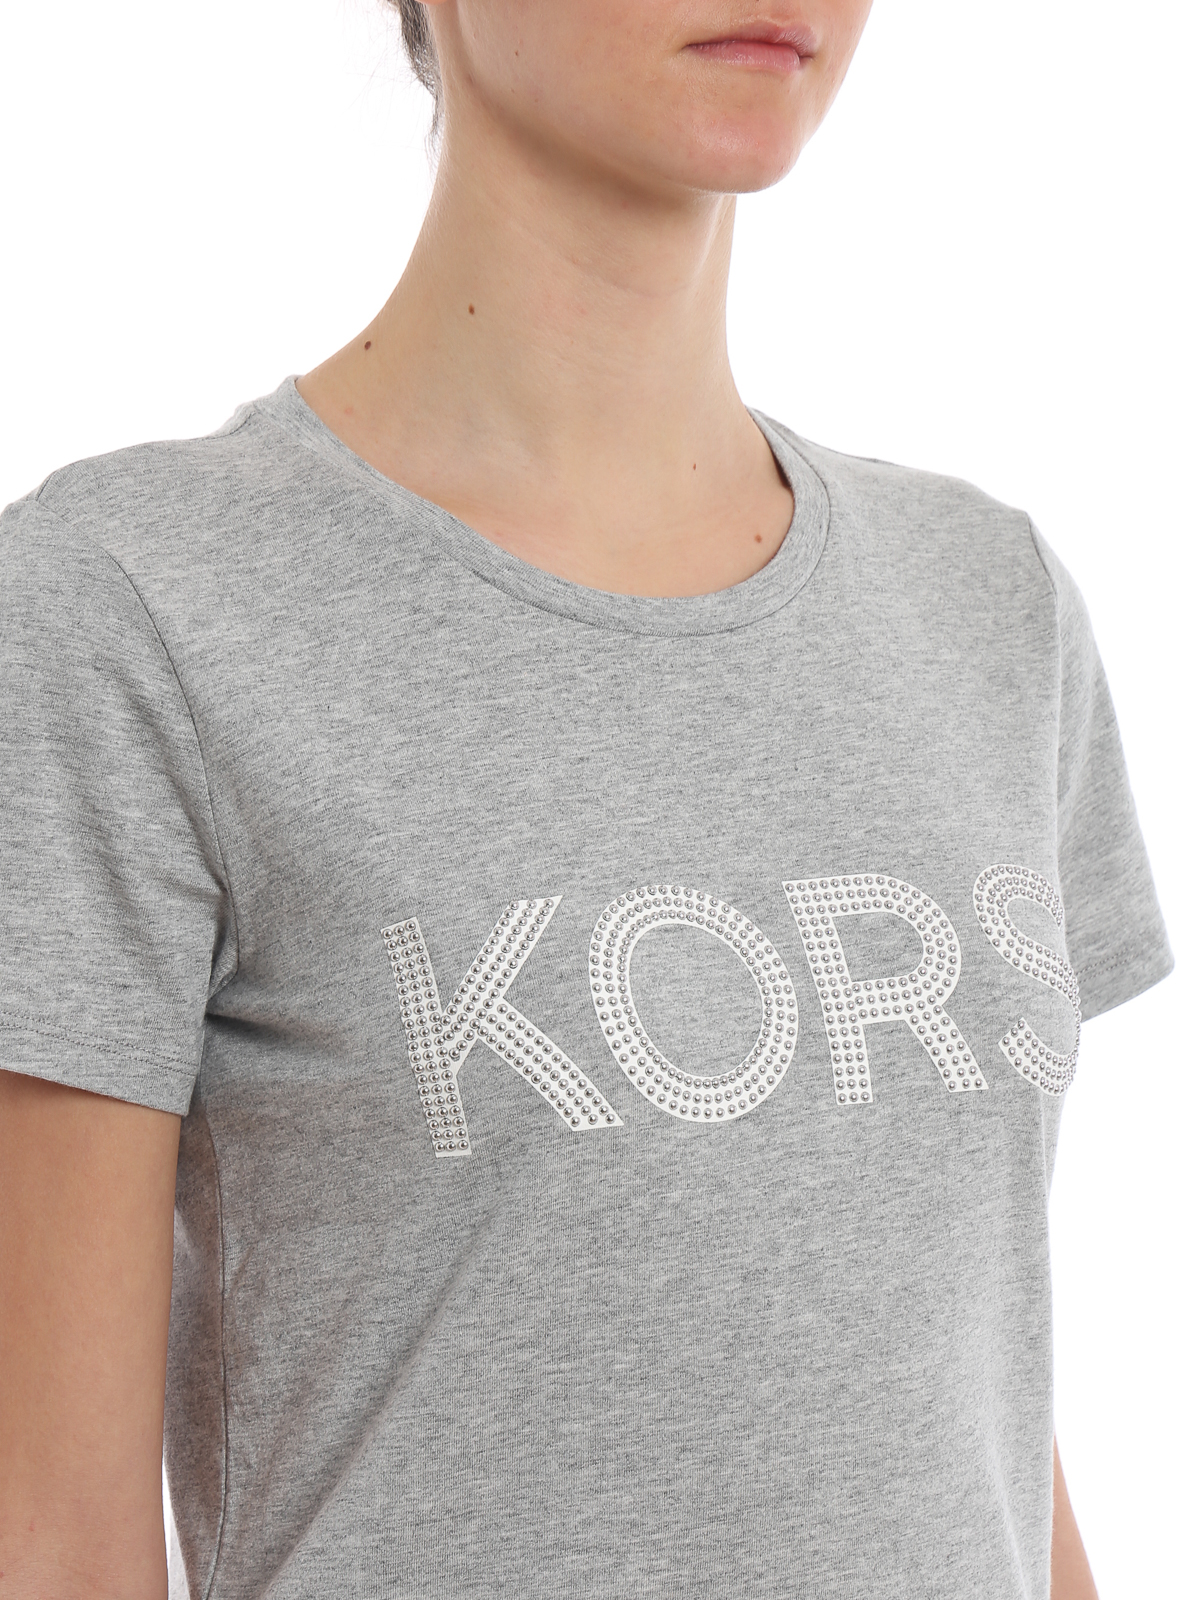 T-shirts Michael Kors - Studded Kors logo grey cotton T-shirt ...